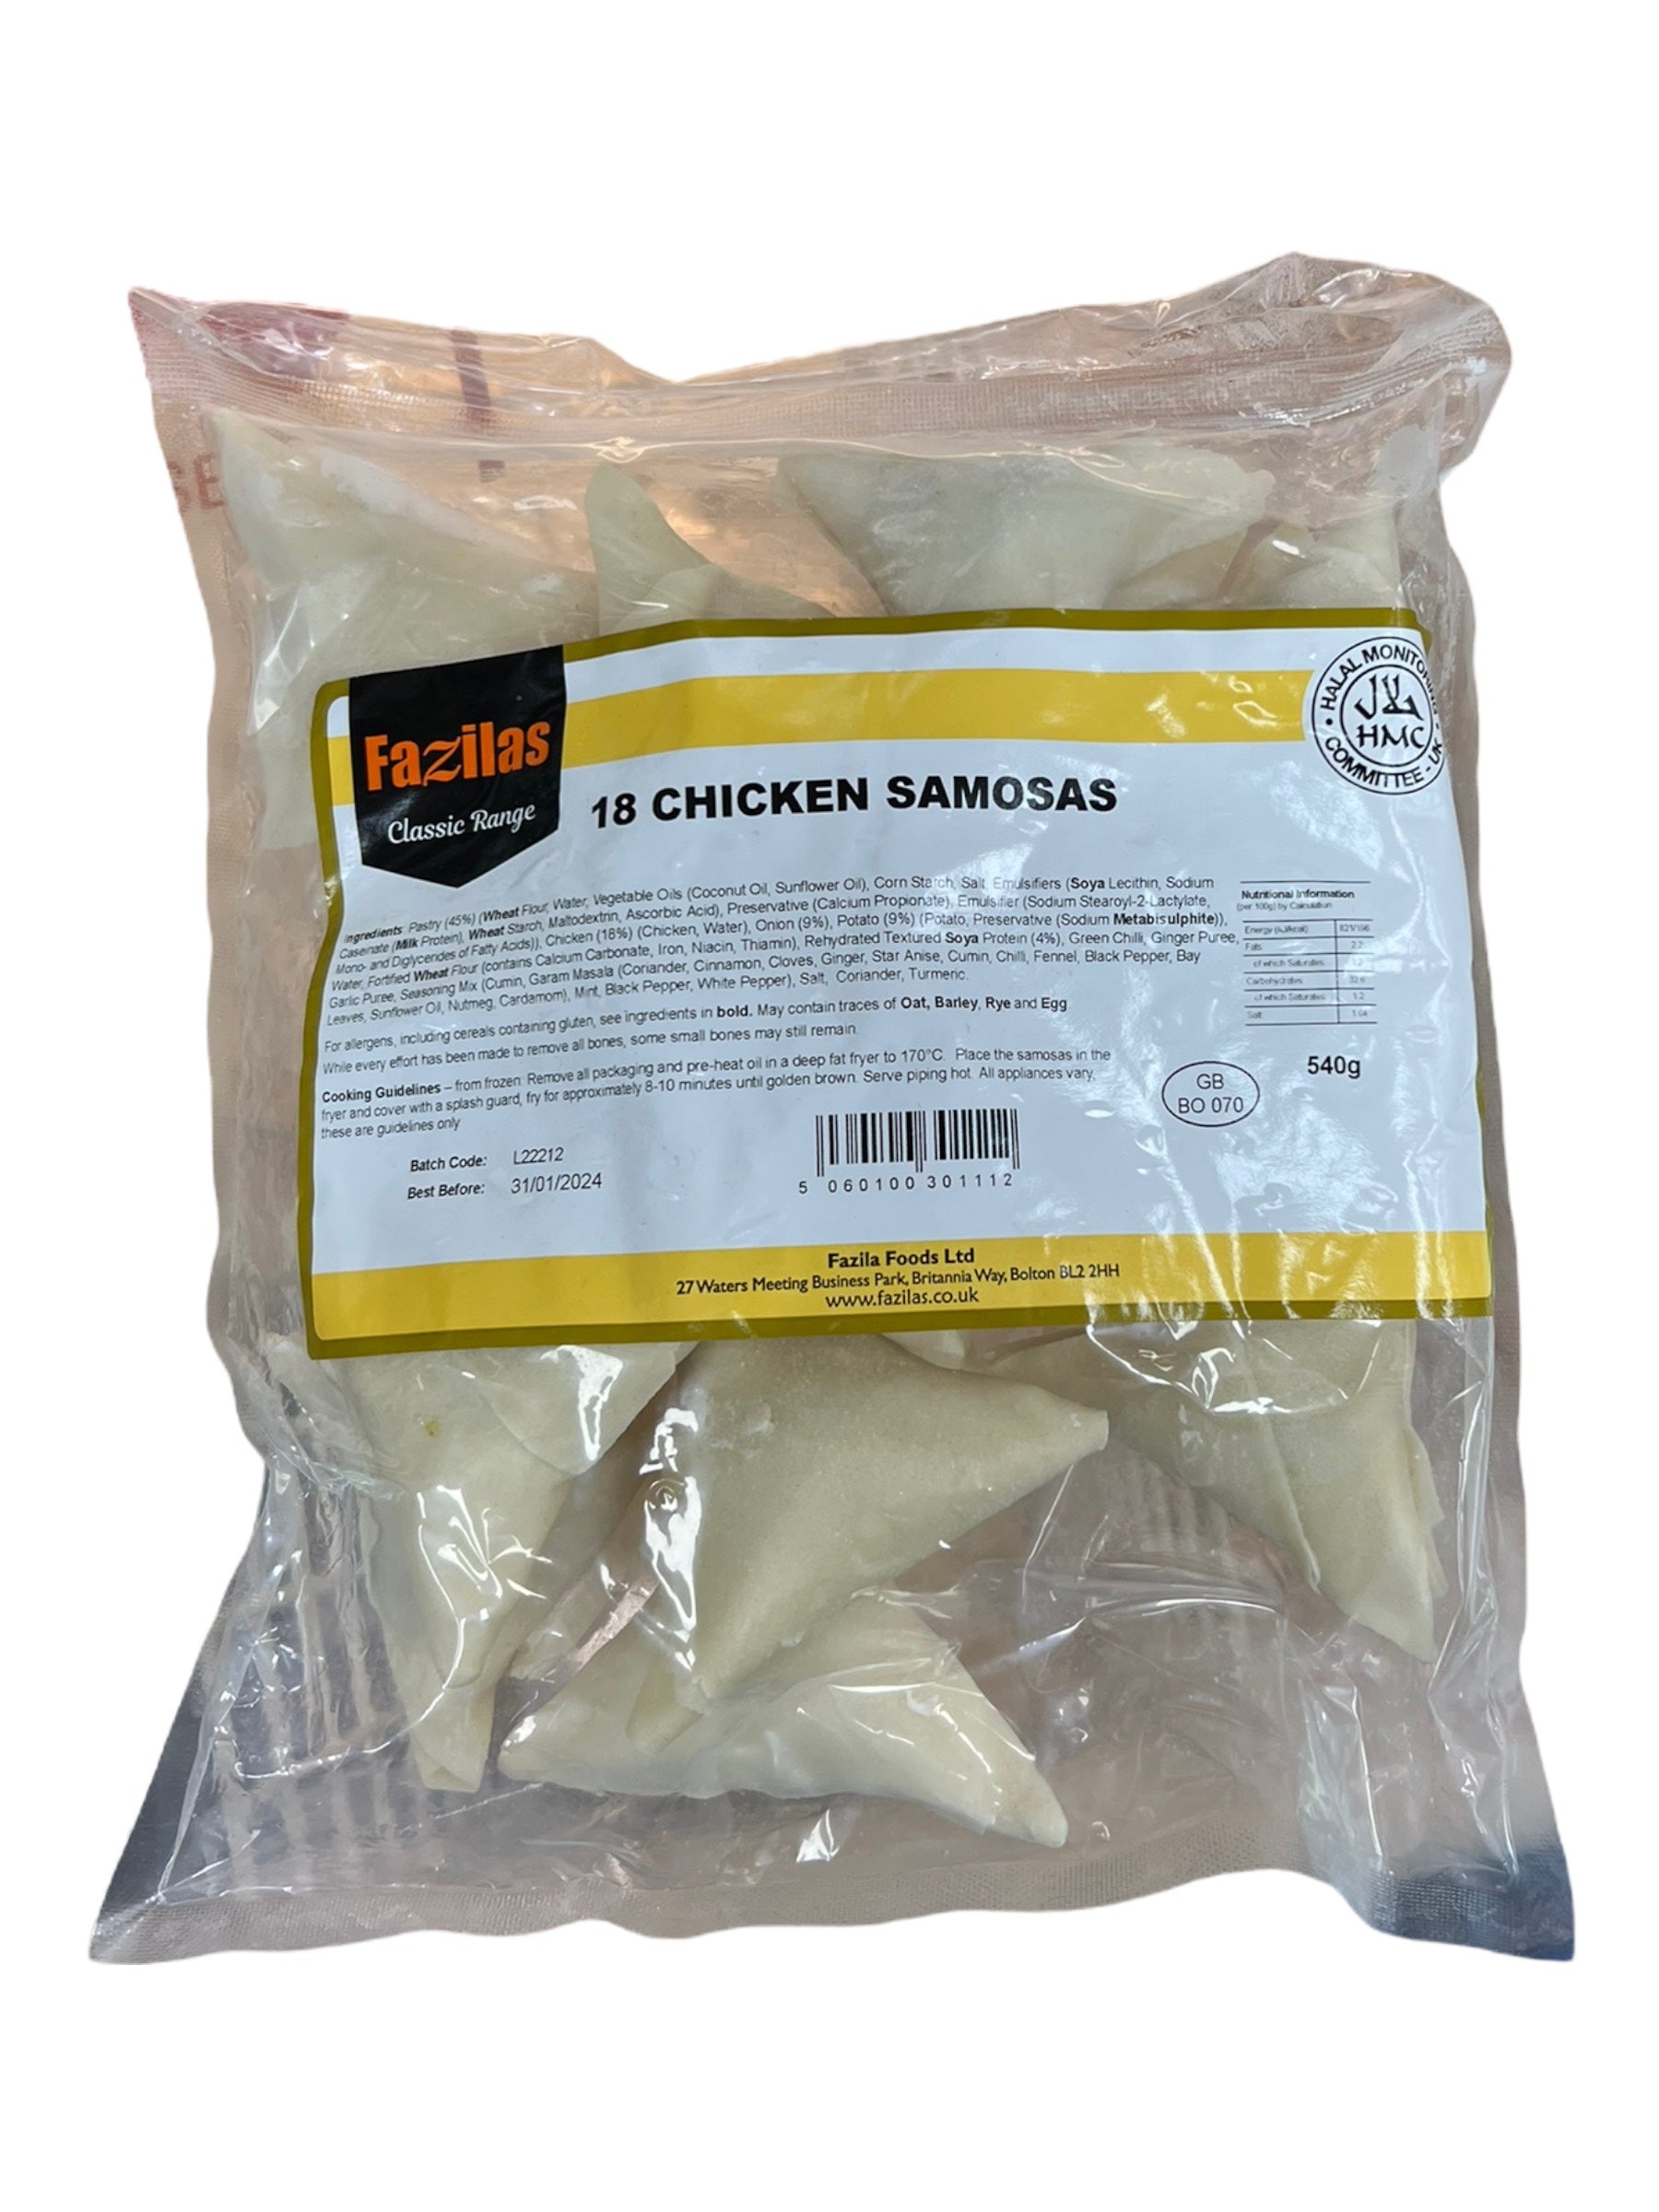 Fazilas 18 Chicken Samosas (540g)